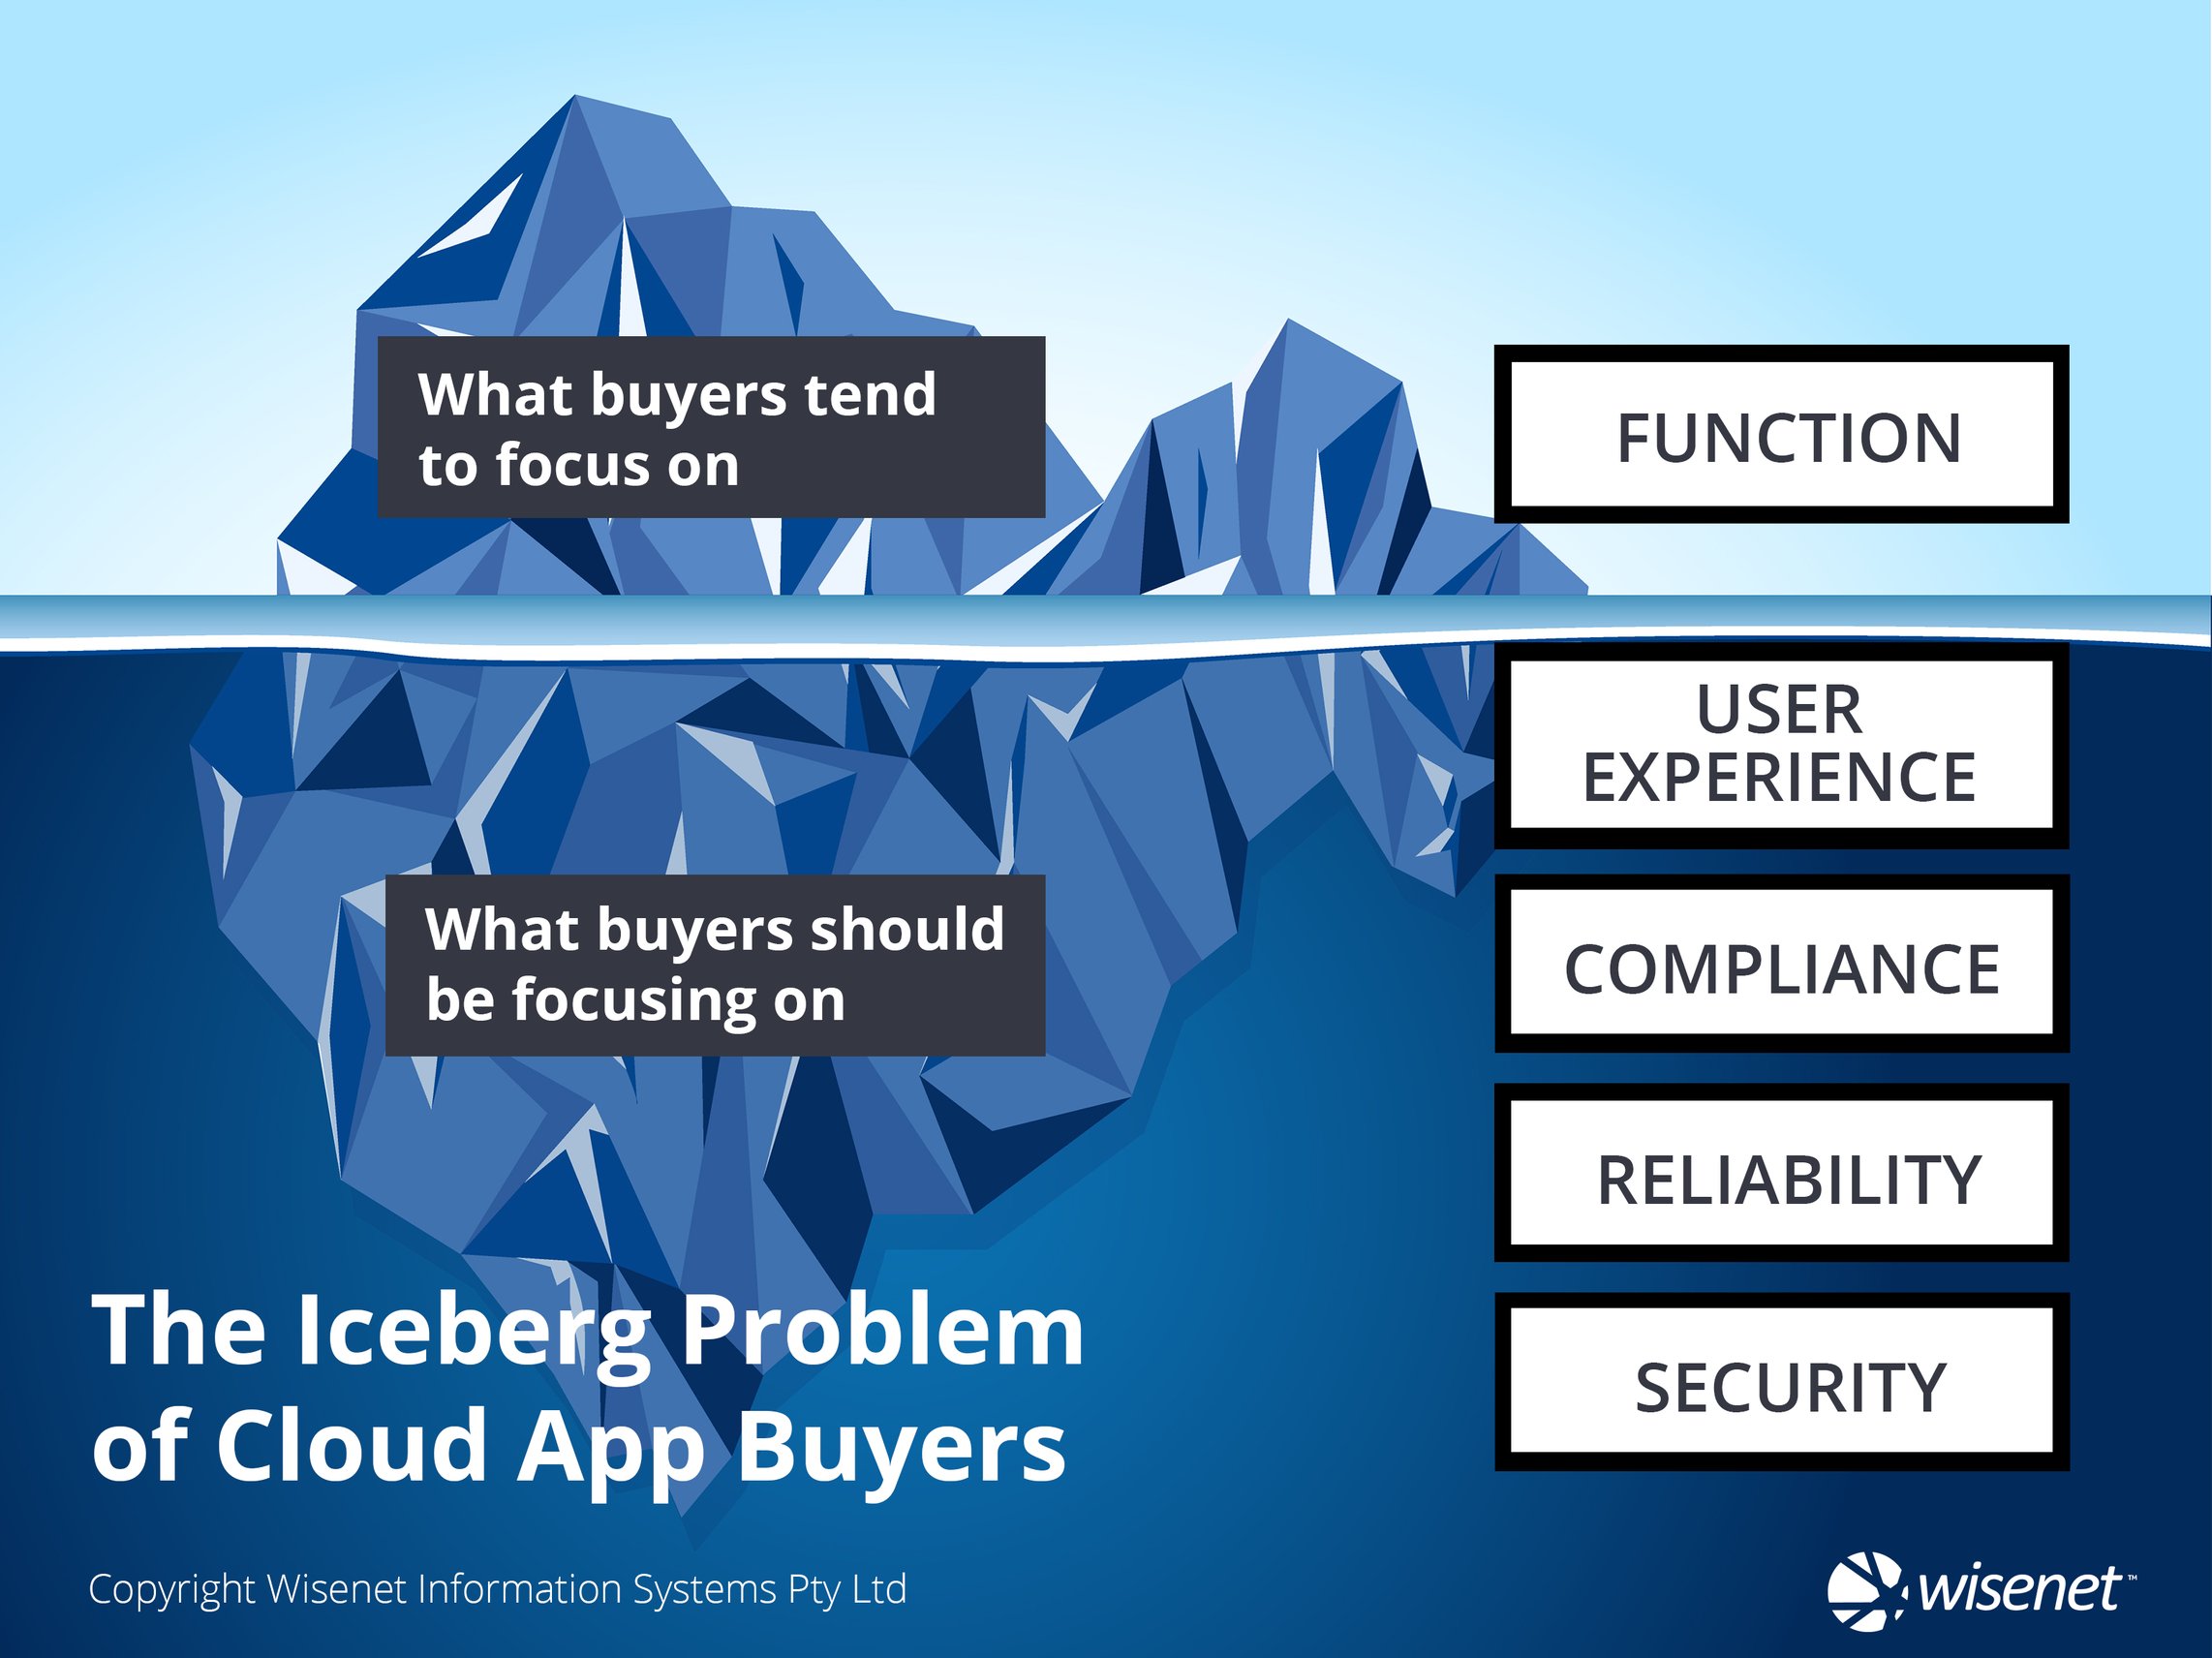 Iceberg_Problem_of_Cloud_App_Buyers_by_Wisenet.png